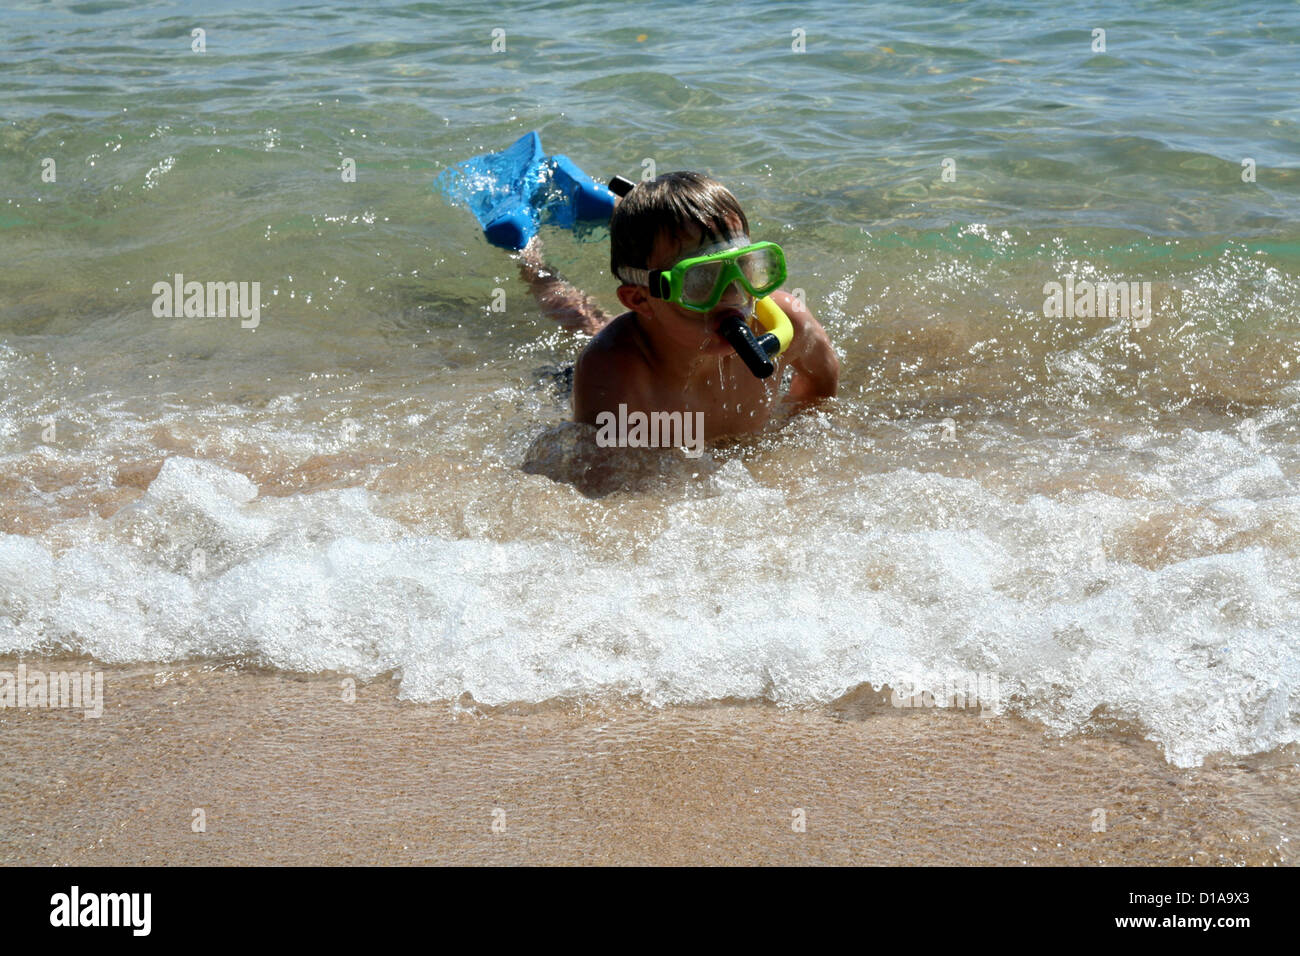 Boy body surfing in from snorkeling in clear blue ocean water Stock Photo